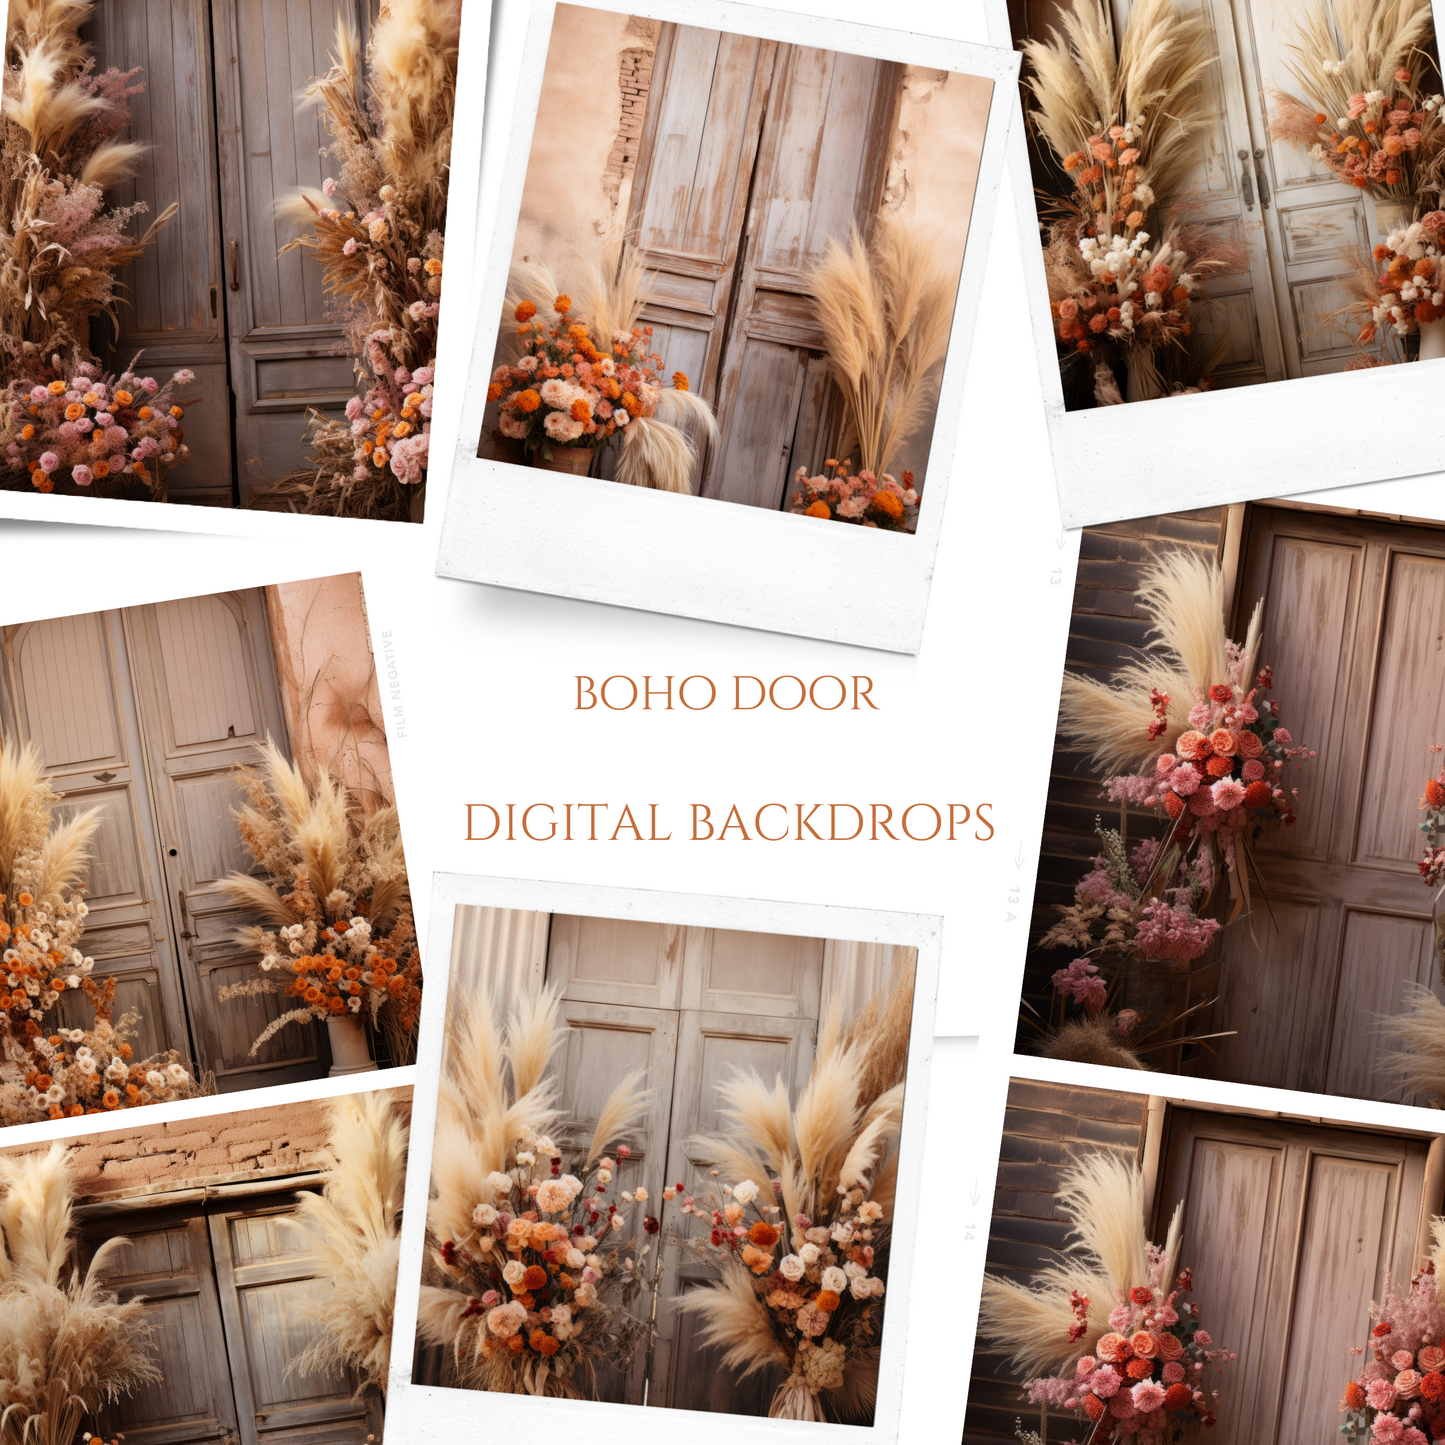 Boho Floral Door Digital Backdrops